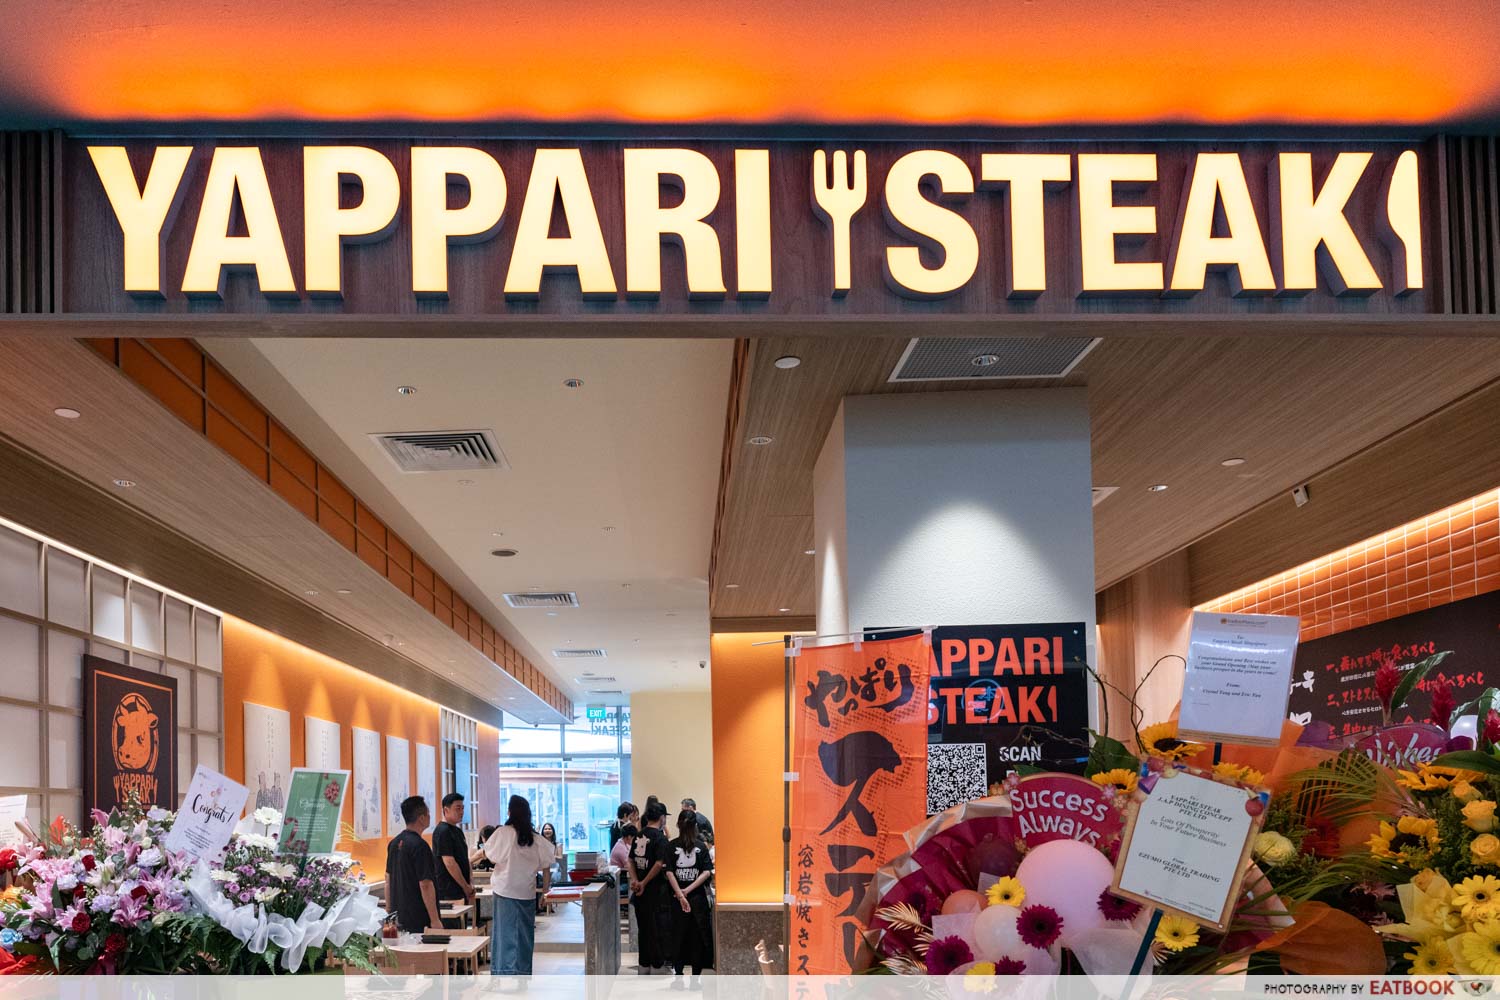 yappari-steak-storefront